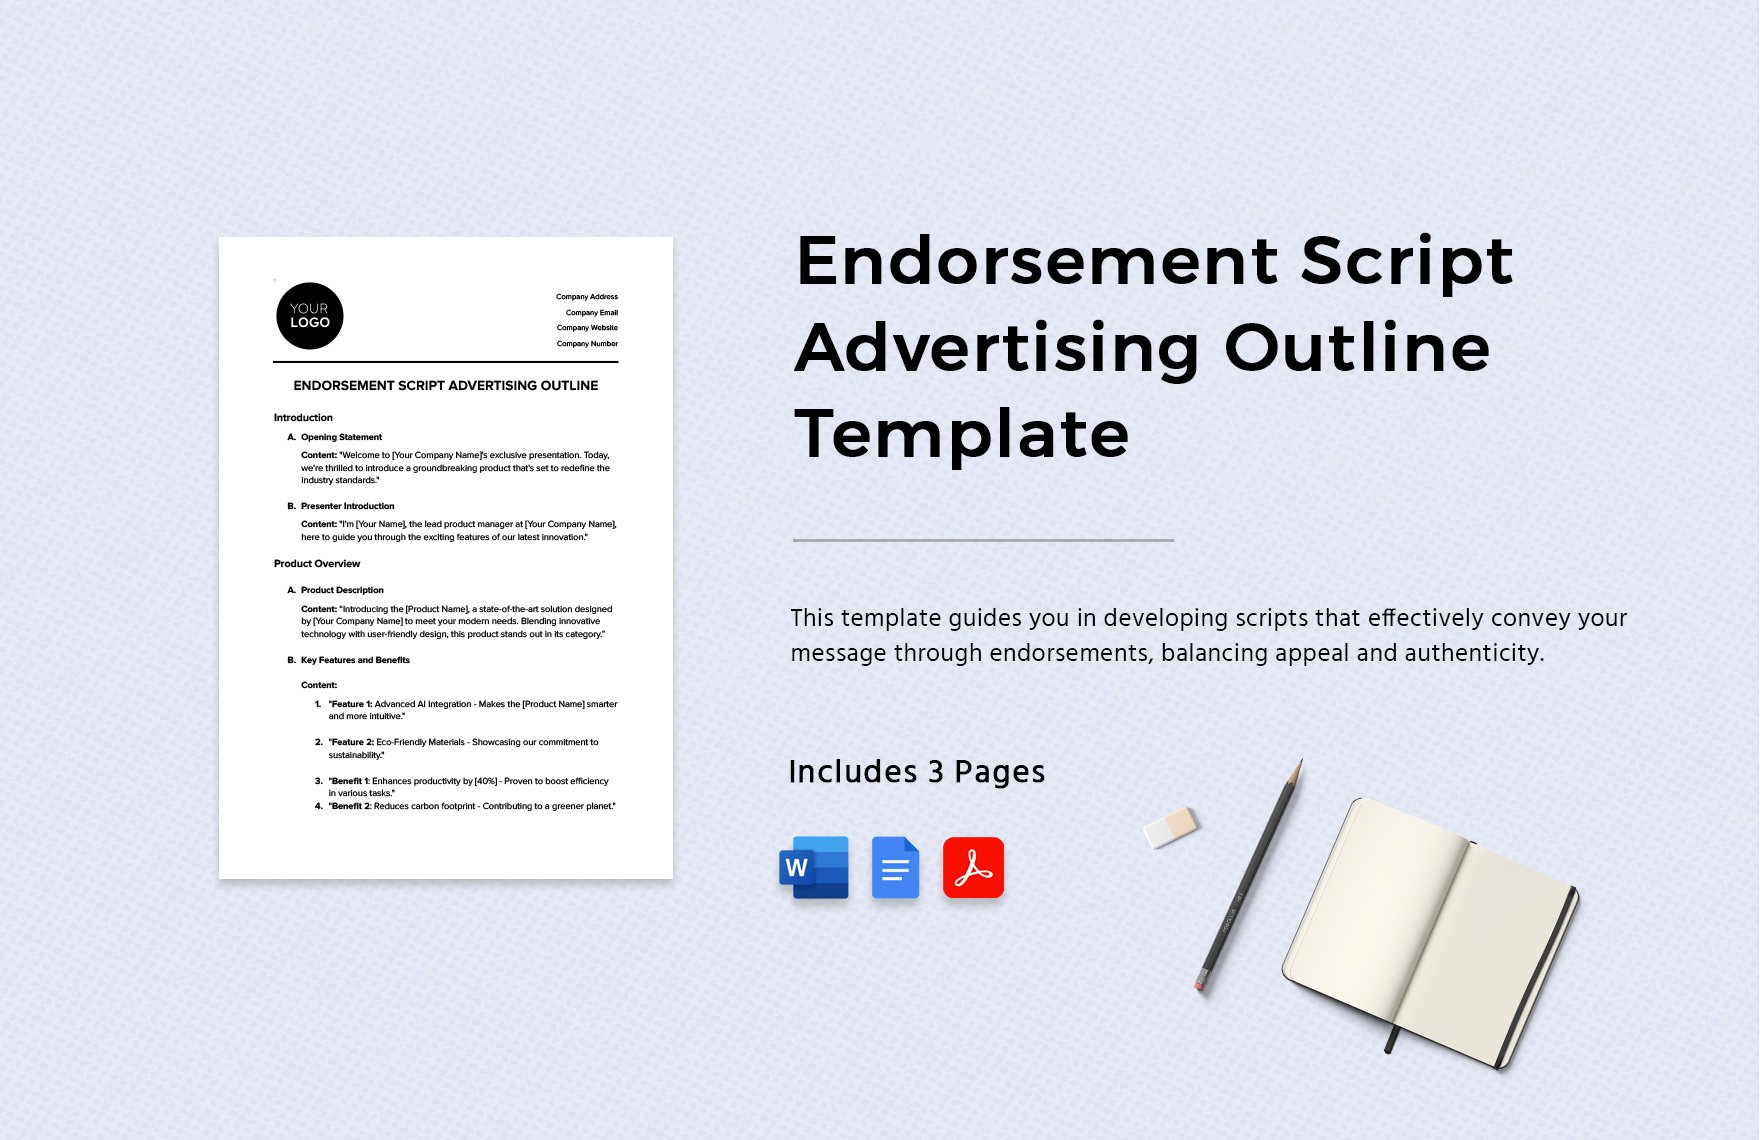 Endorsement Script Advertising Outline Template